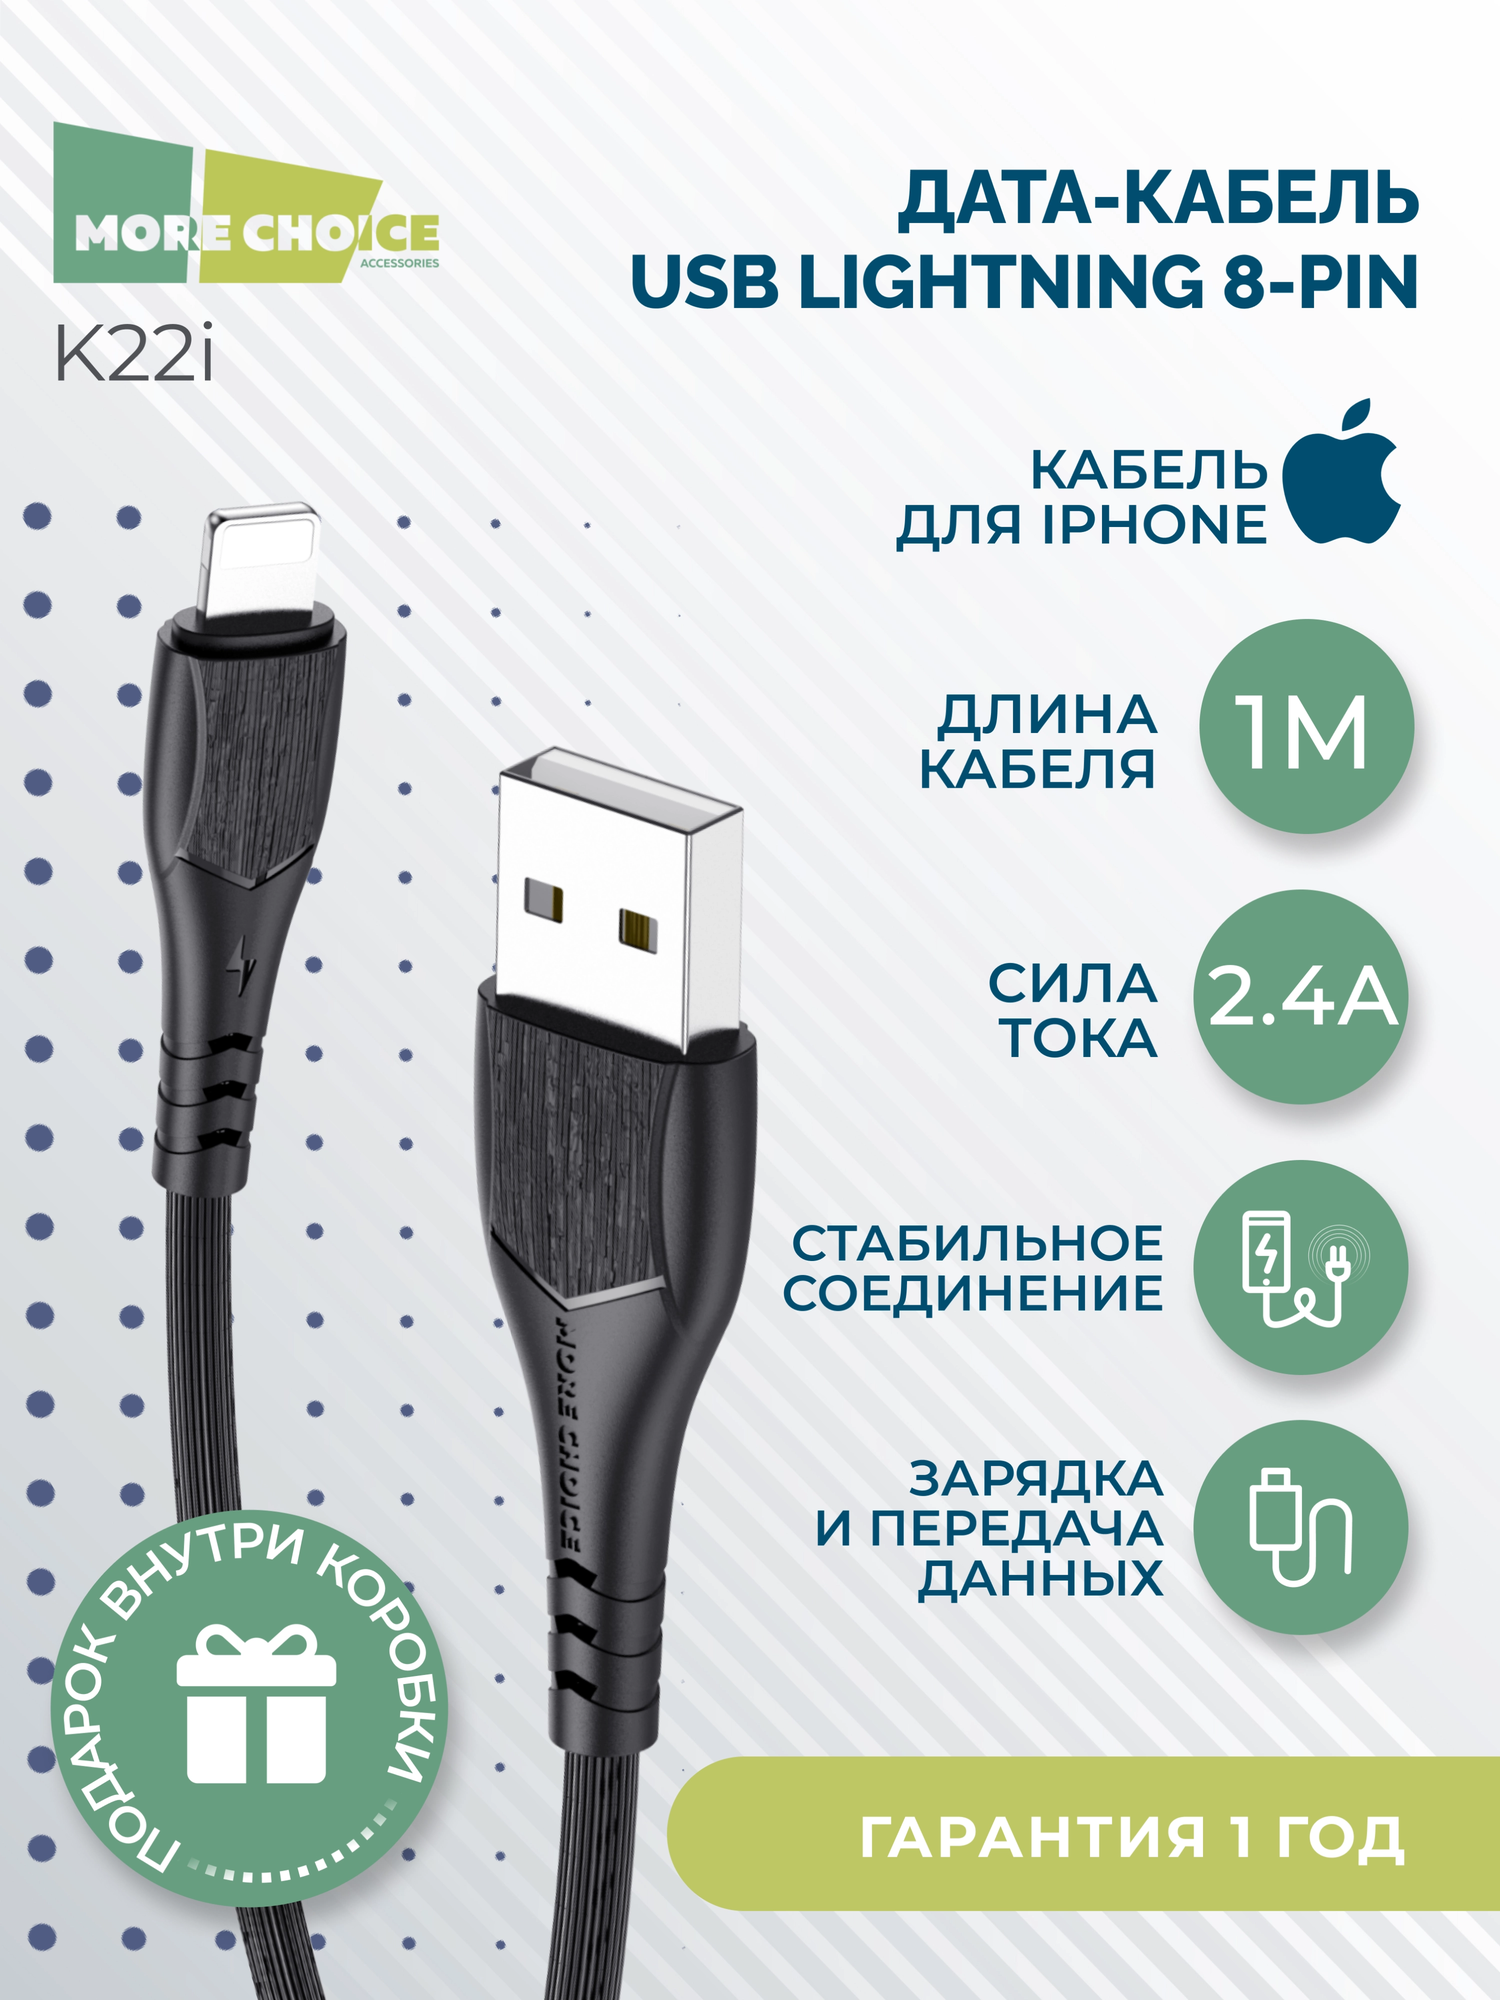 Дата-кабель USB 2.4A для Lightning 8-pin More choice K22i TPE 1м Black